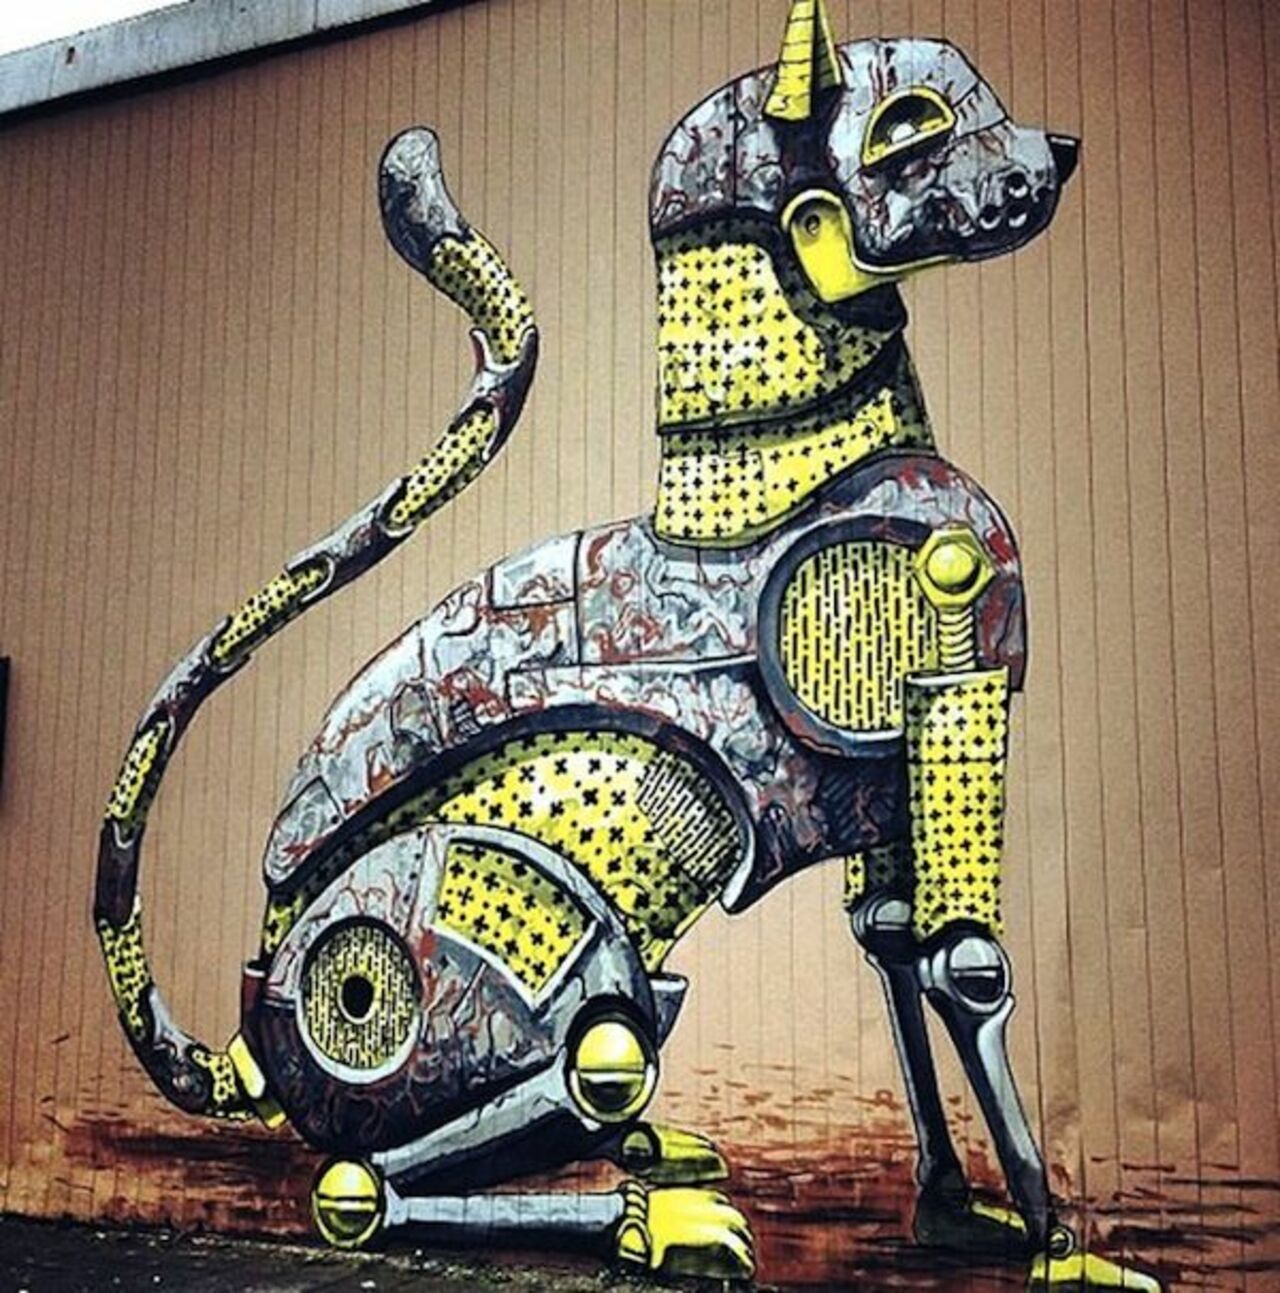 Mecanic #cat #streetart #art @glastoguy @GraffSpotting @GraffitiFeed @Graffiti_Life https://t.co/BOt4BbNewb